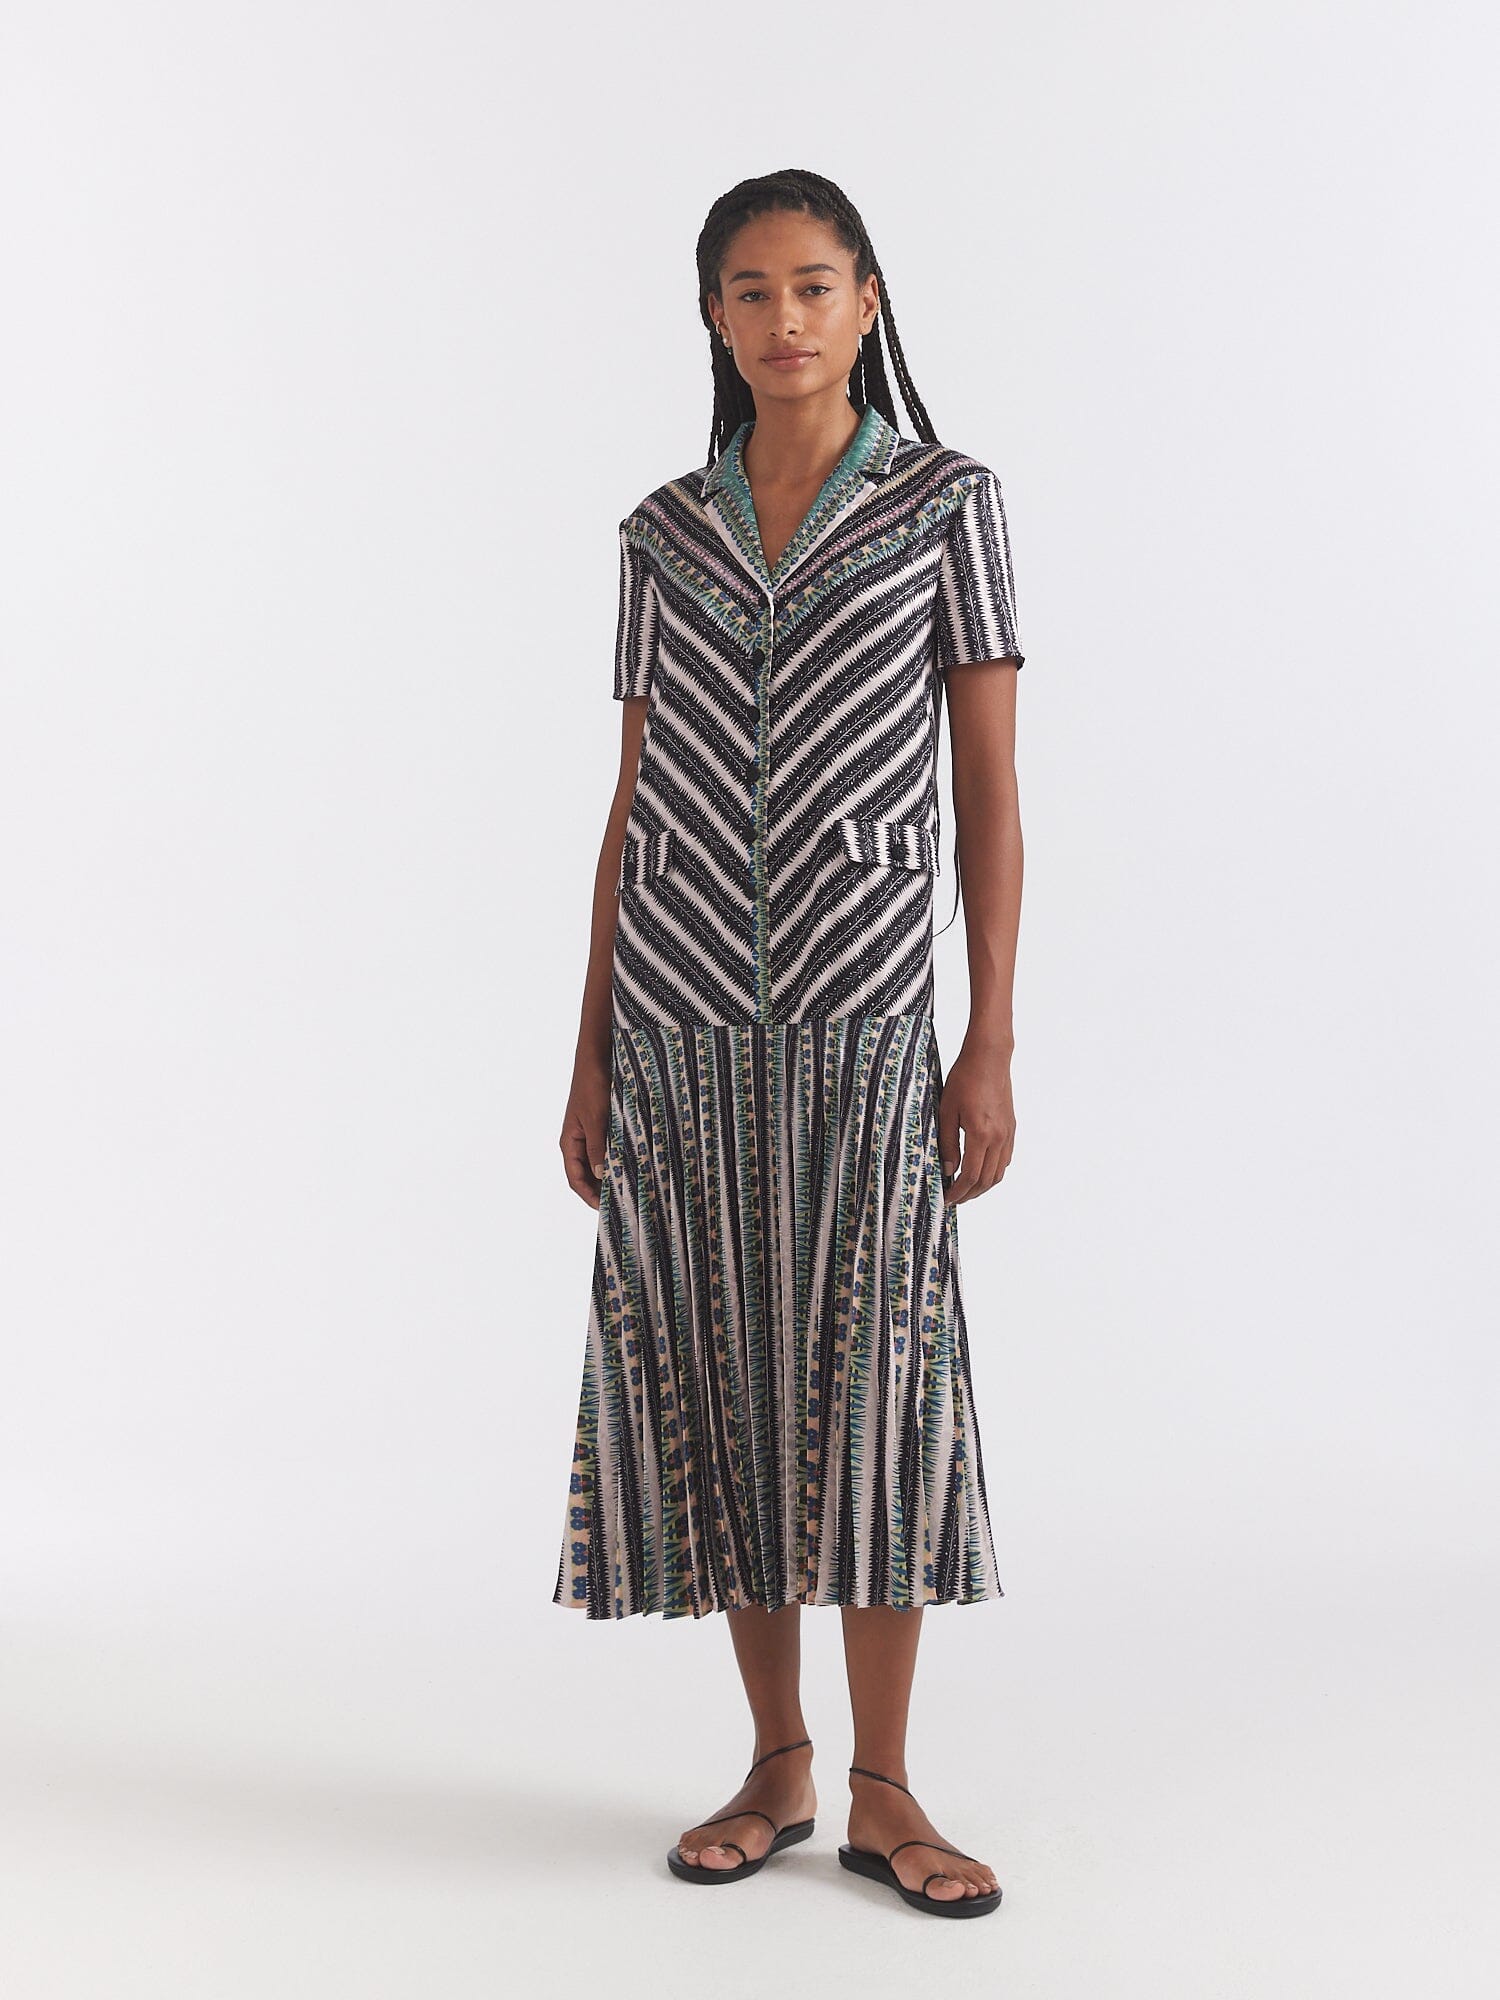 Sonia C Dress in Photos Stripe